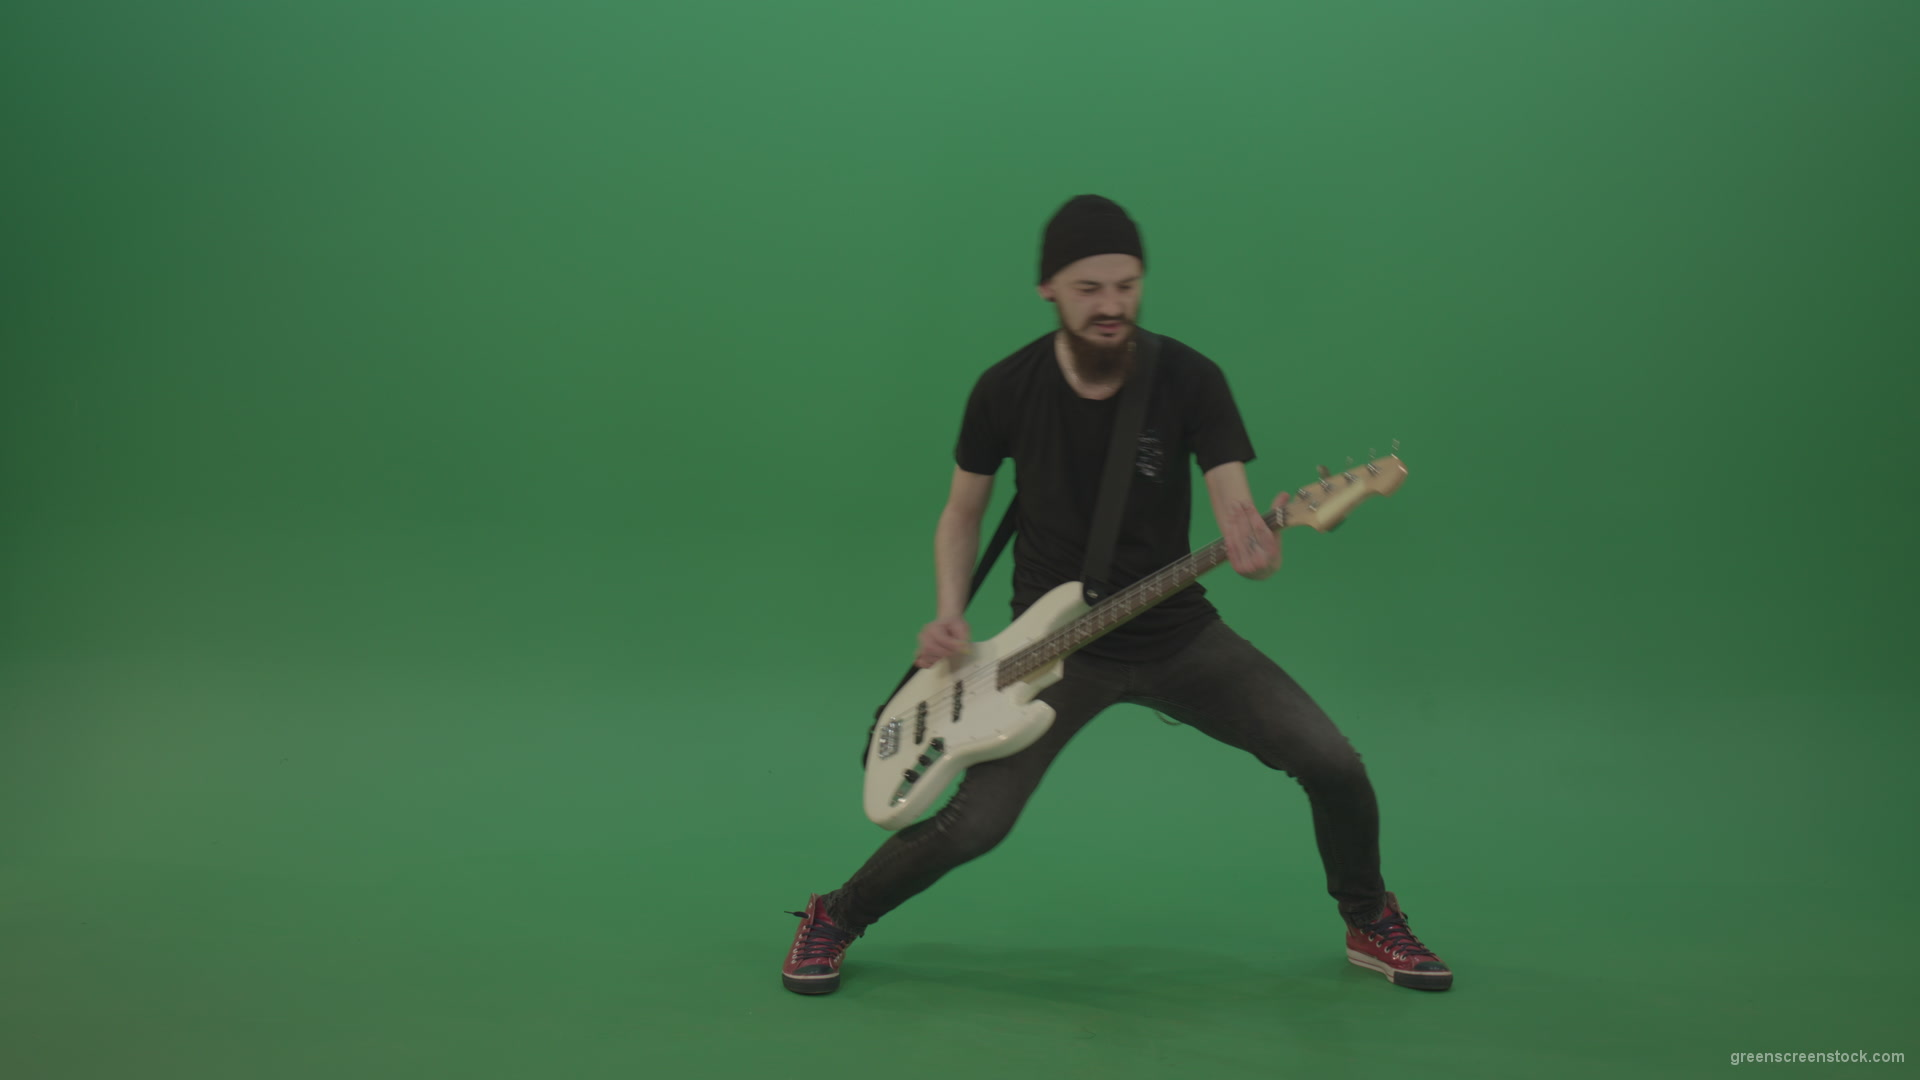 Young-man-with-beard-in-black-shirt-play-white-bass-guitar-on-green-screen_007 Green Screen Stock